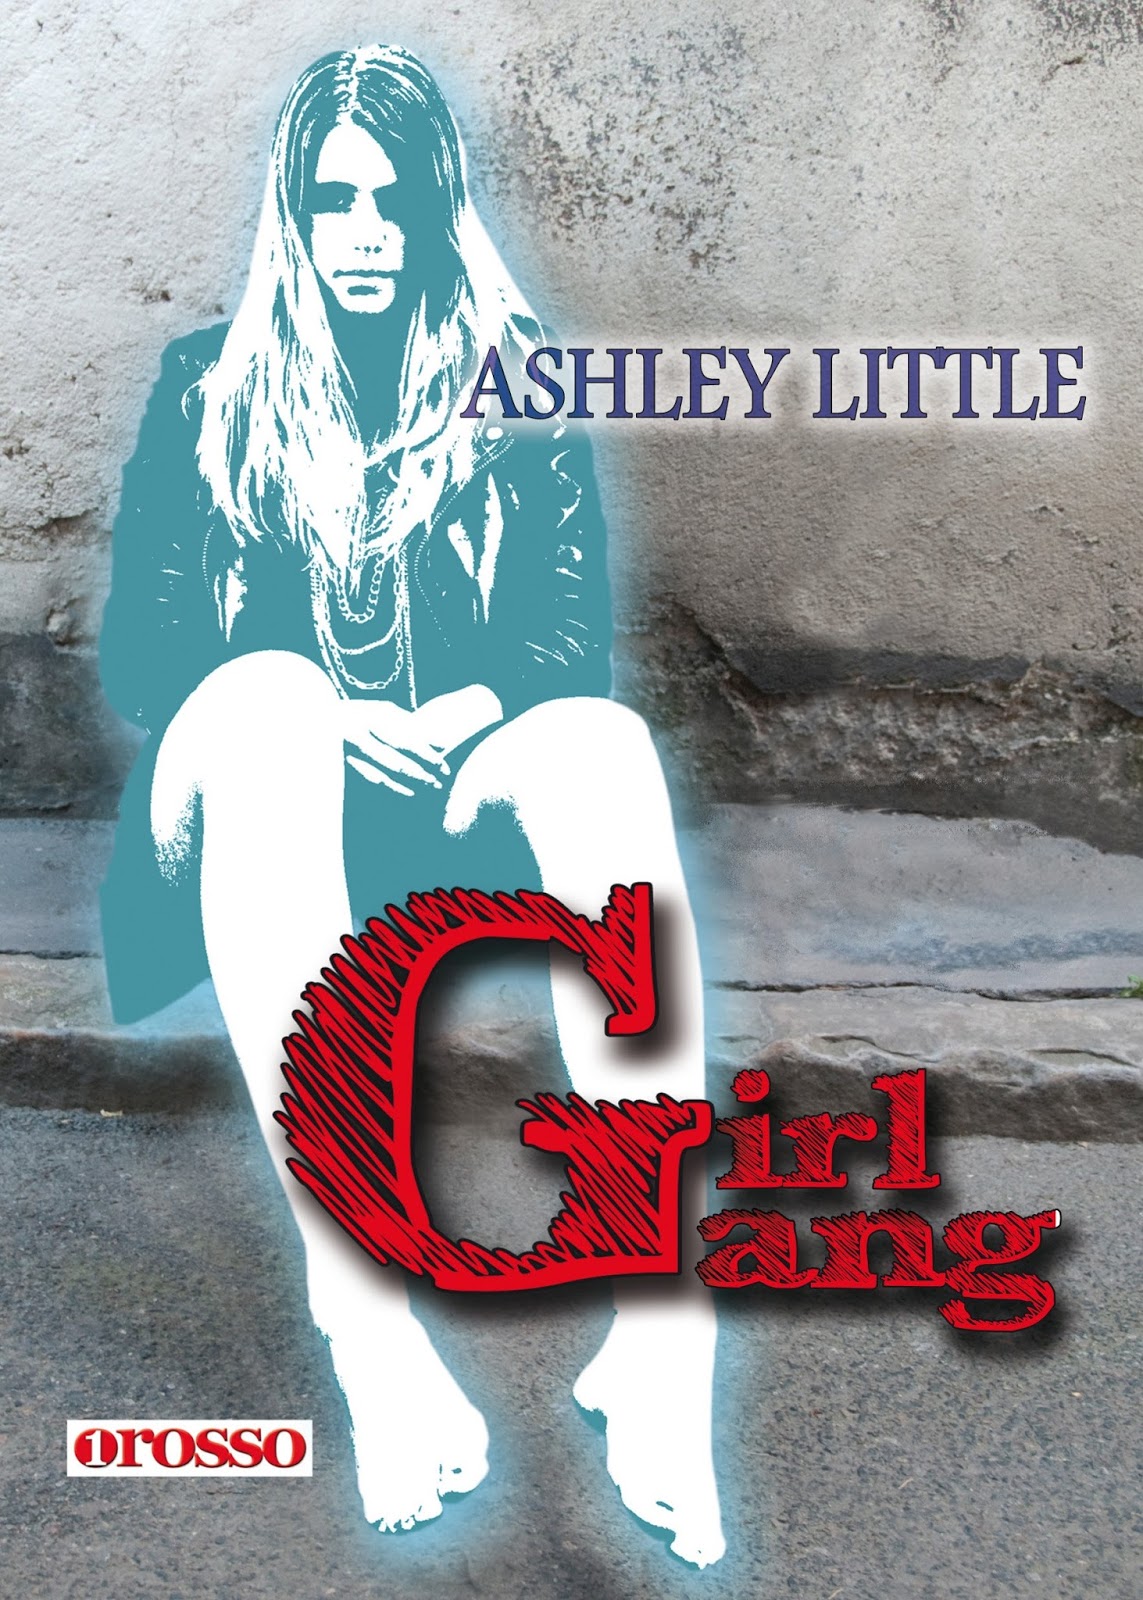 girl gang